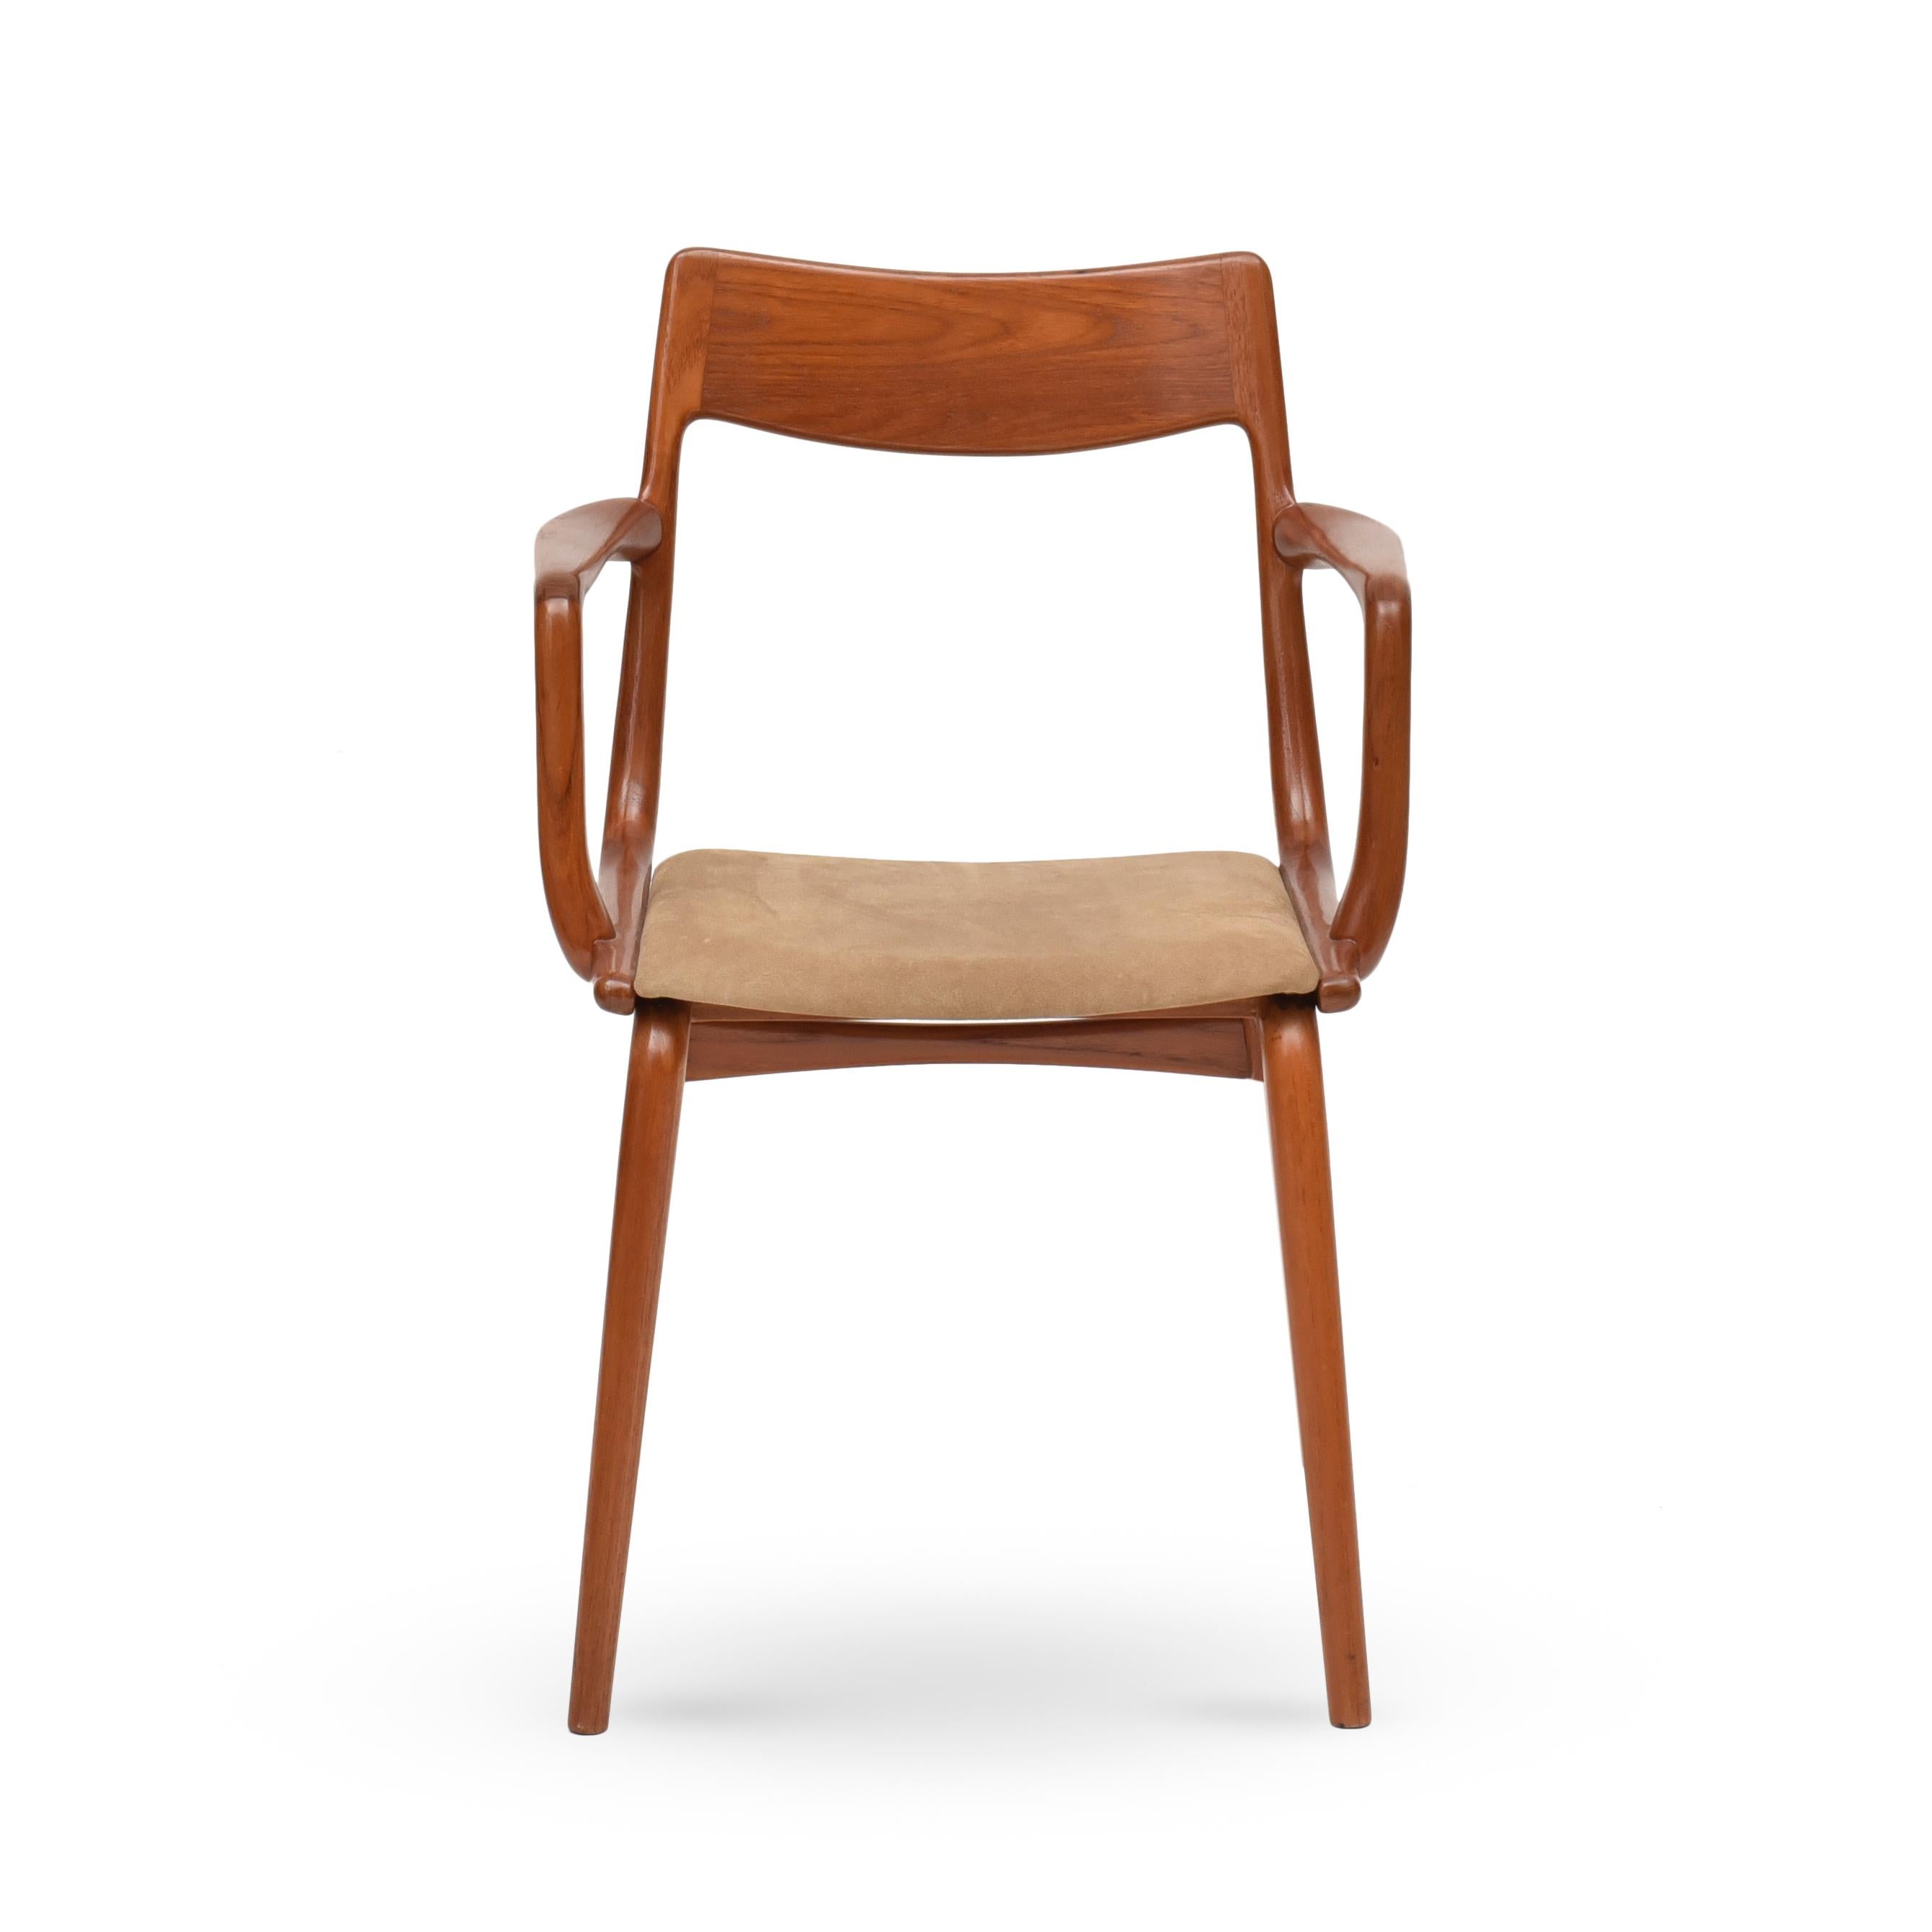 Mid-20th Century Boomerang Chair in Salmwood by Alfred Christensen for Slagelse Møbelværk. 